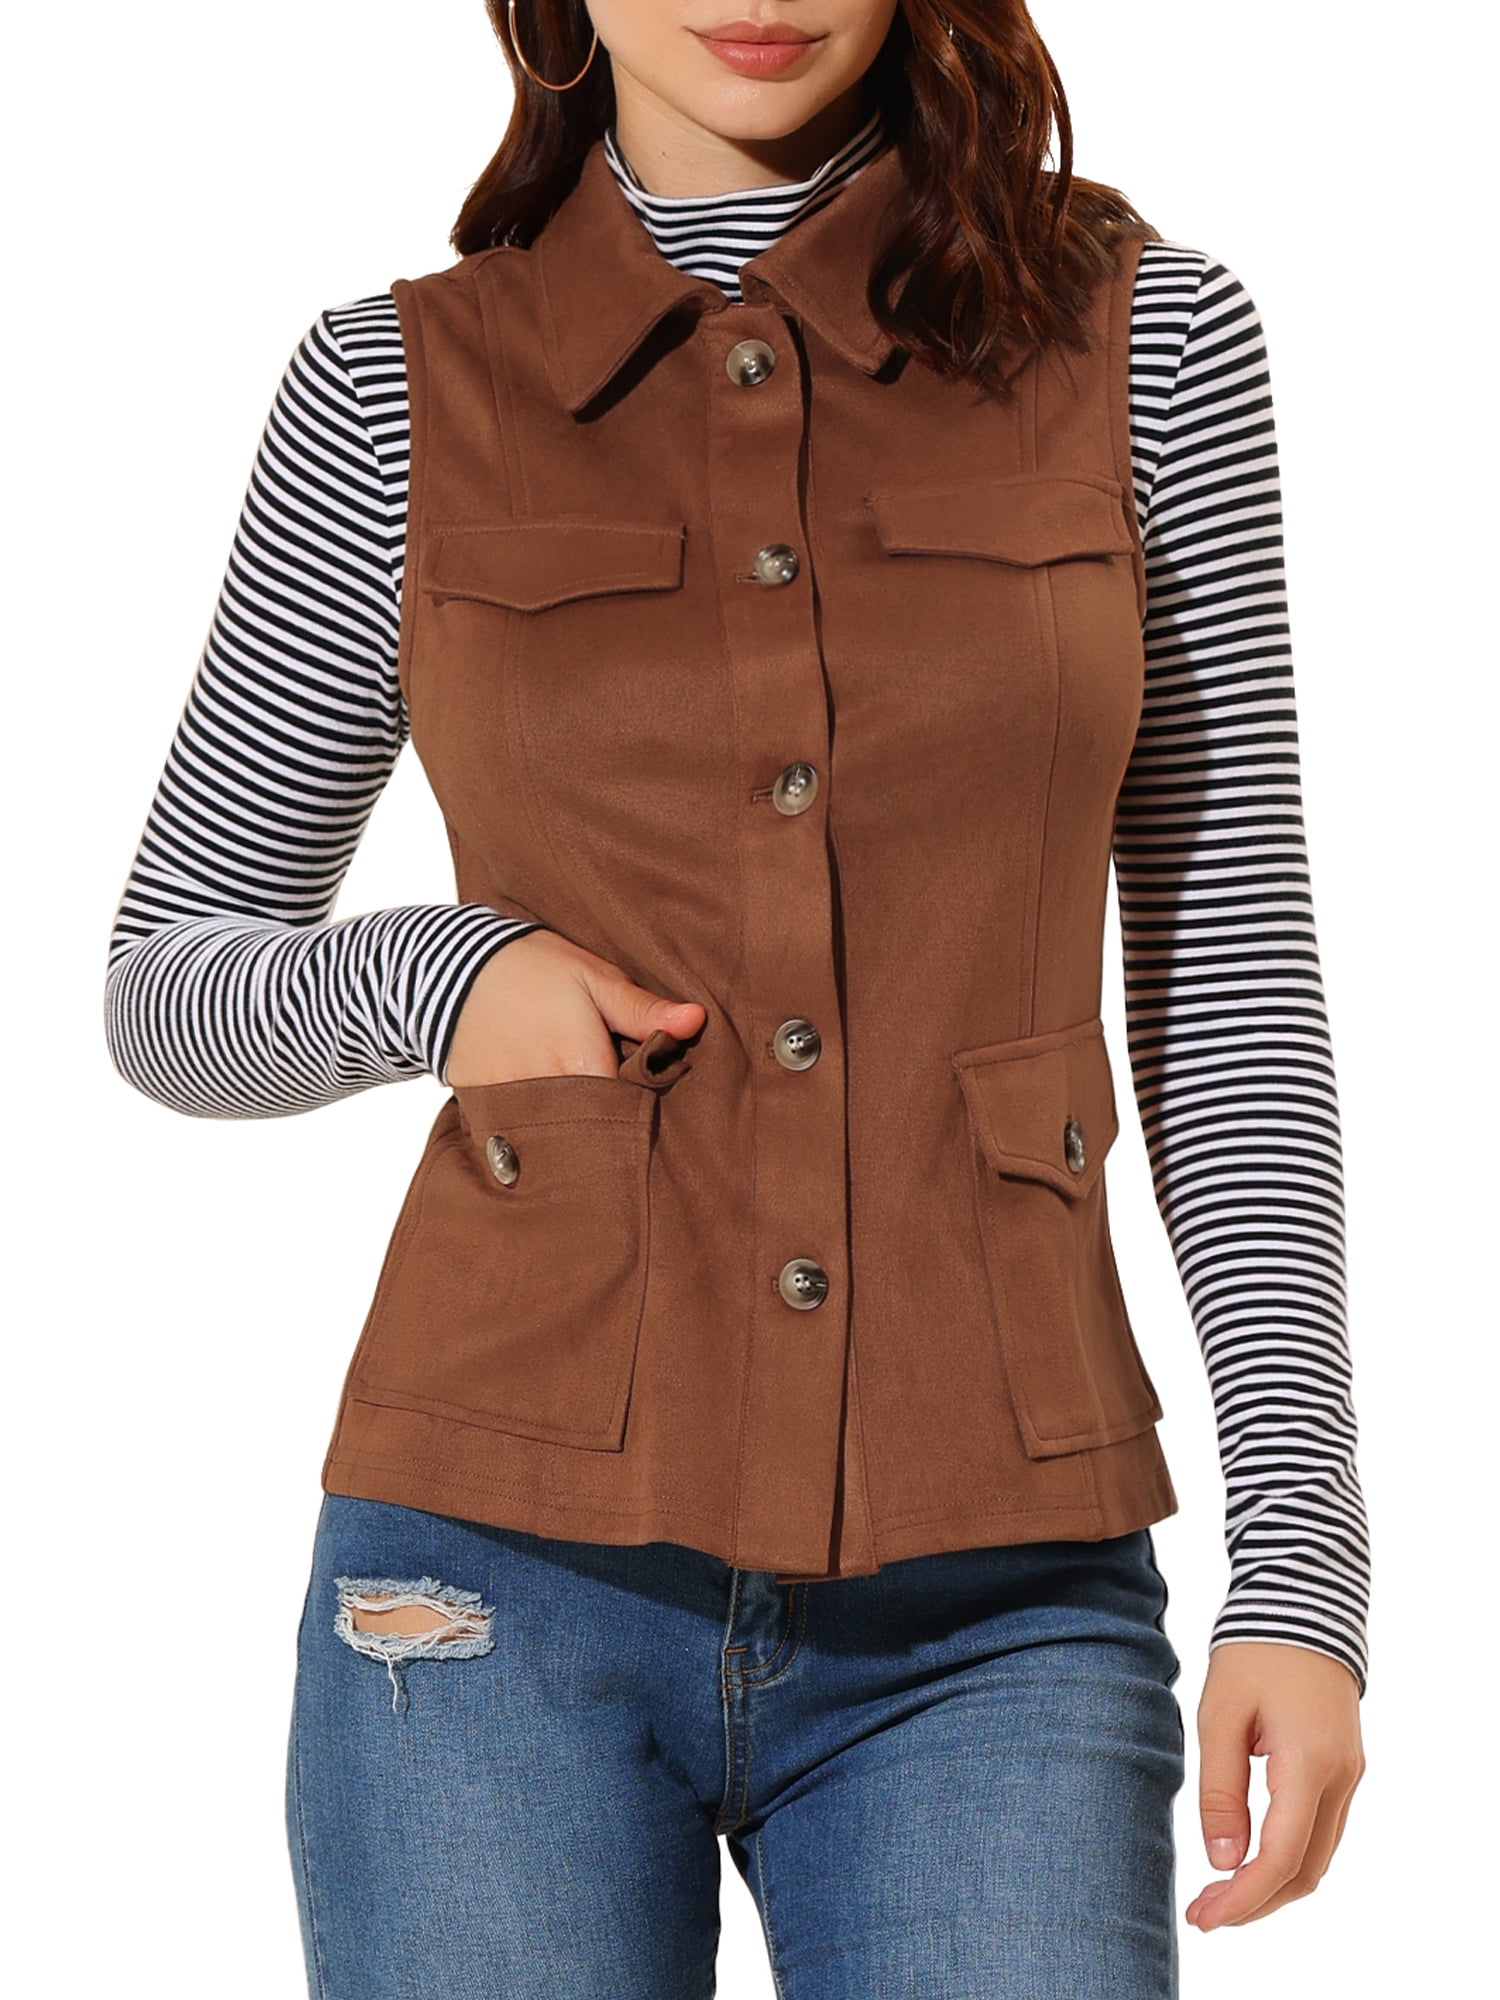 Grianlook Women Casual Sleeveless Blazer Solid Color Jacket Vest Office  Lapel Neck Waistcoat